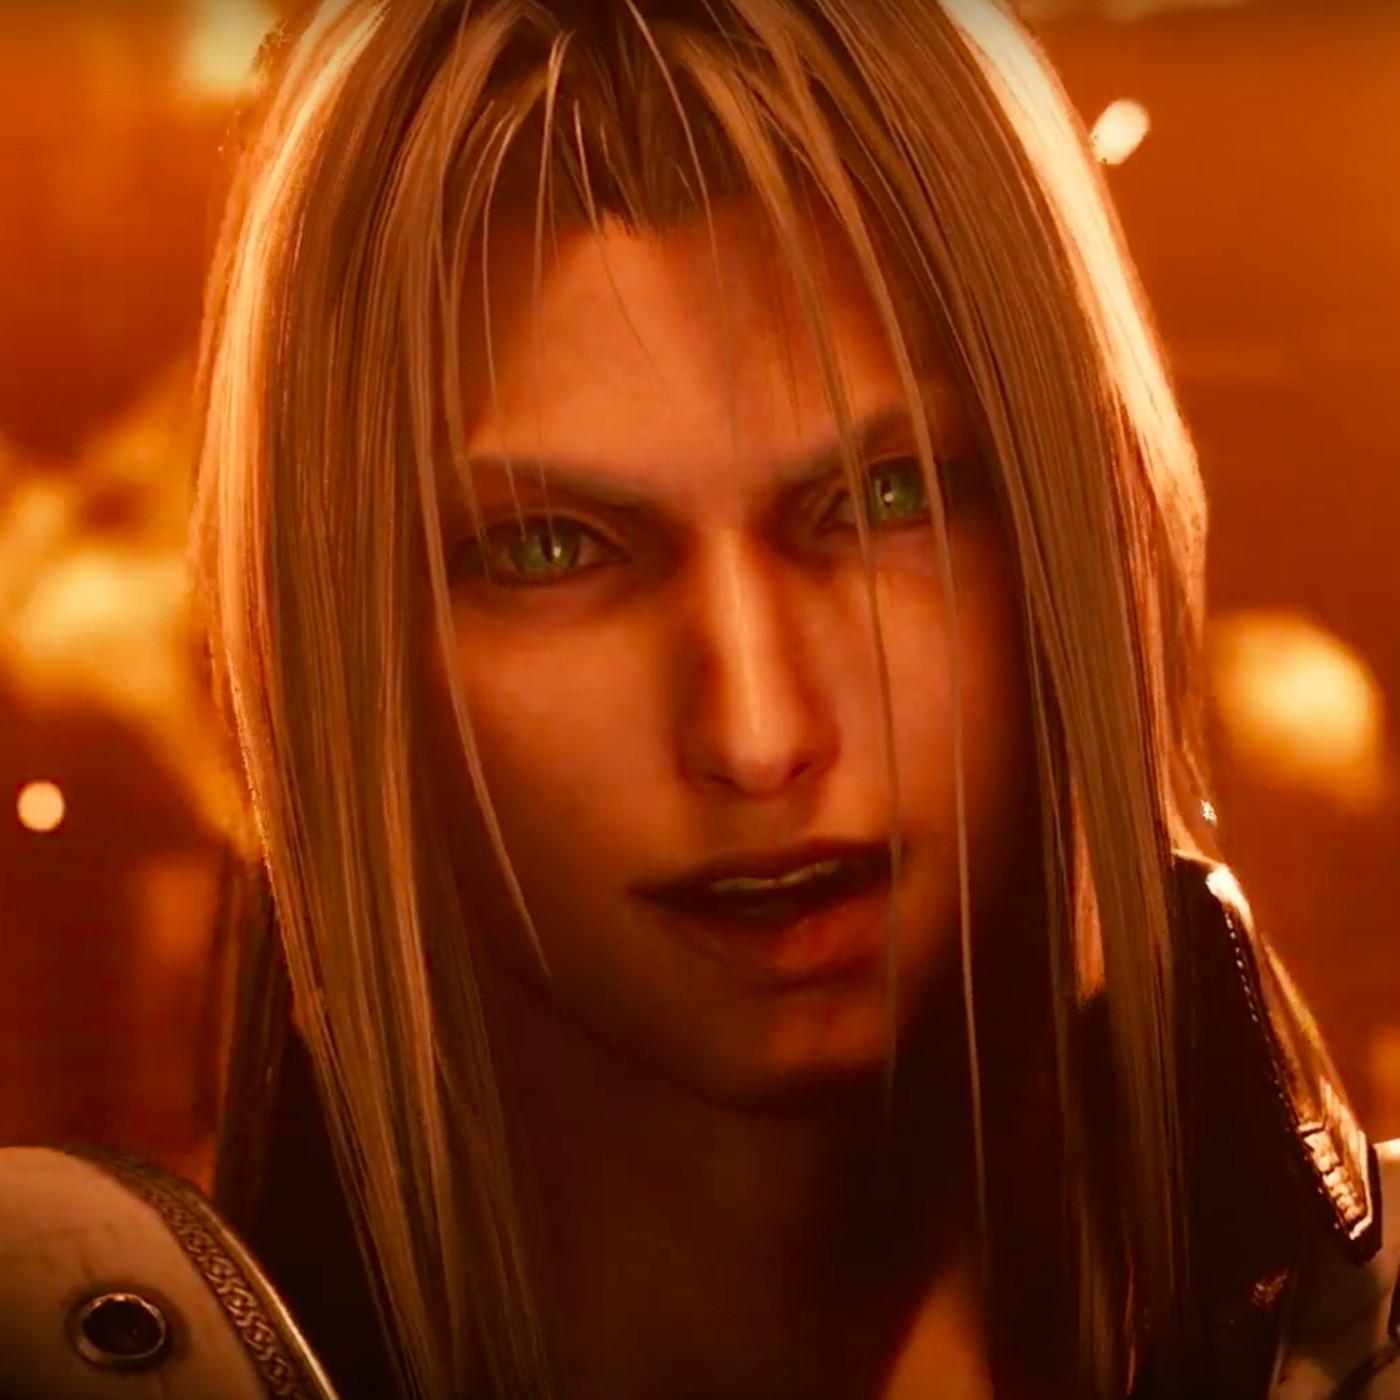 Final Fantasy VII Remake's new trailer shows off combat, Tifa